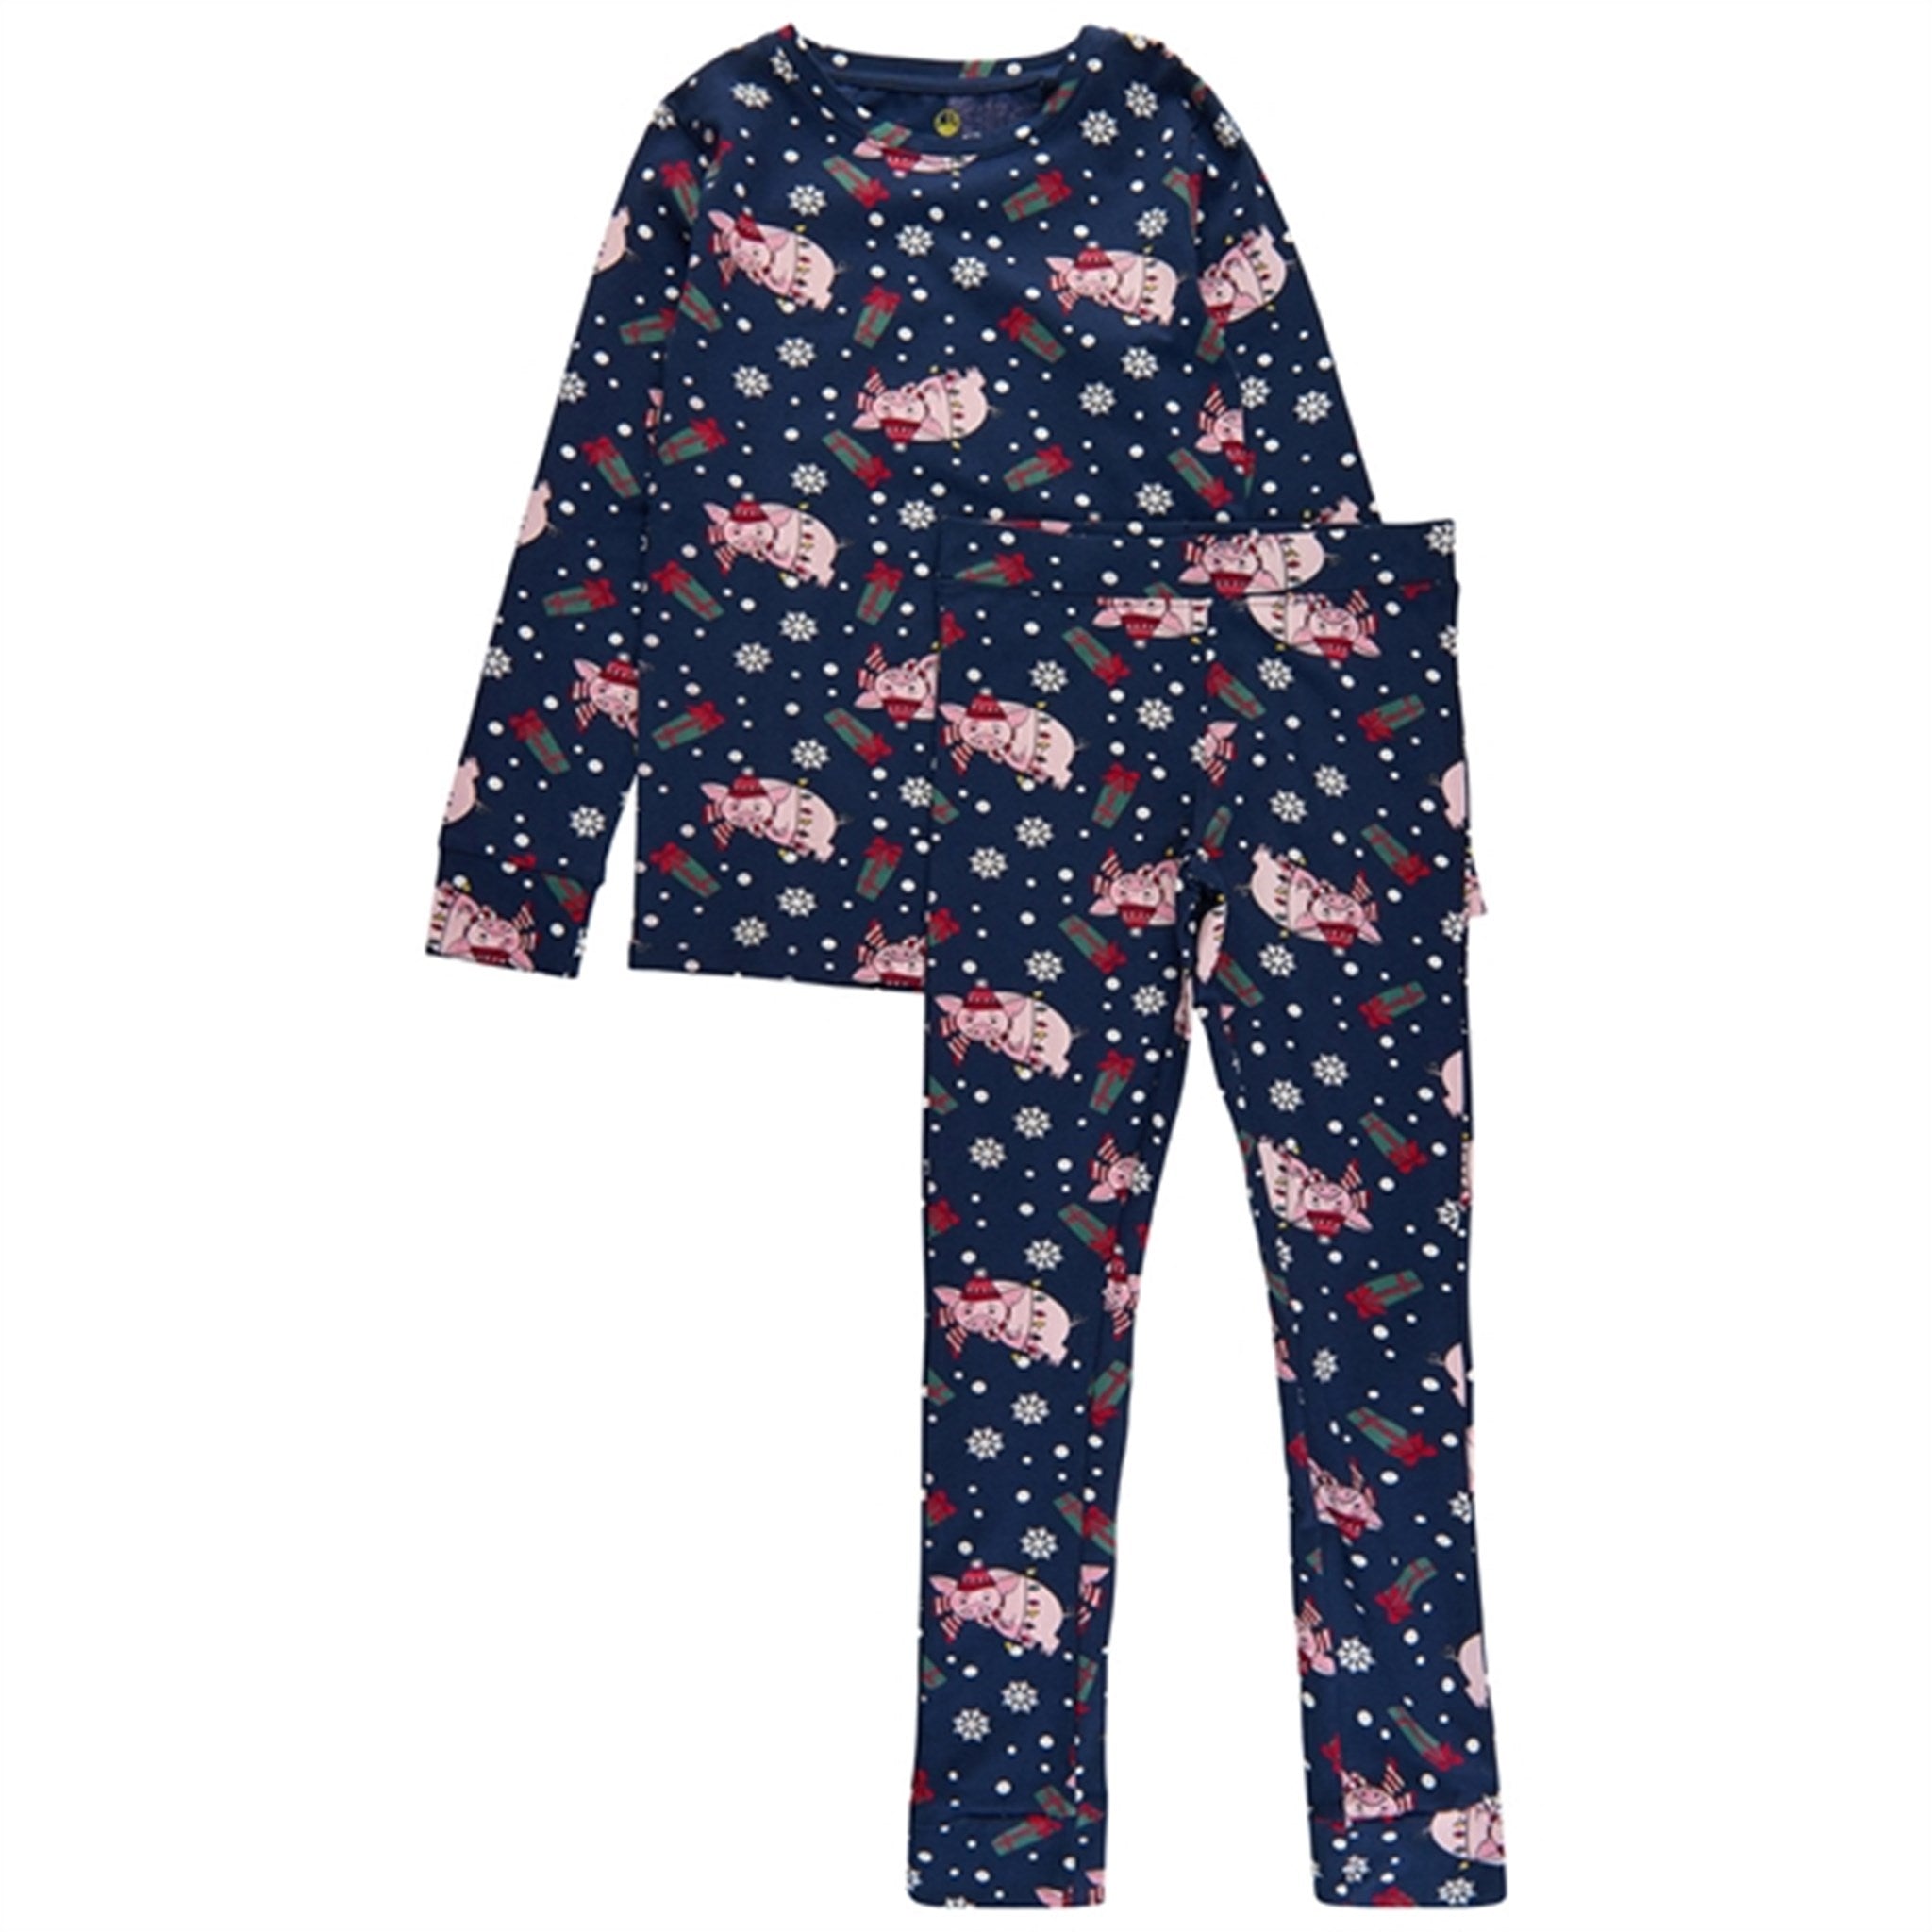 The New Navy Blazer Holiday Pyjamas